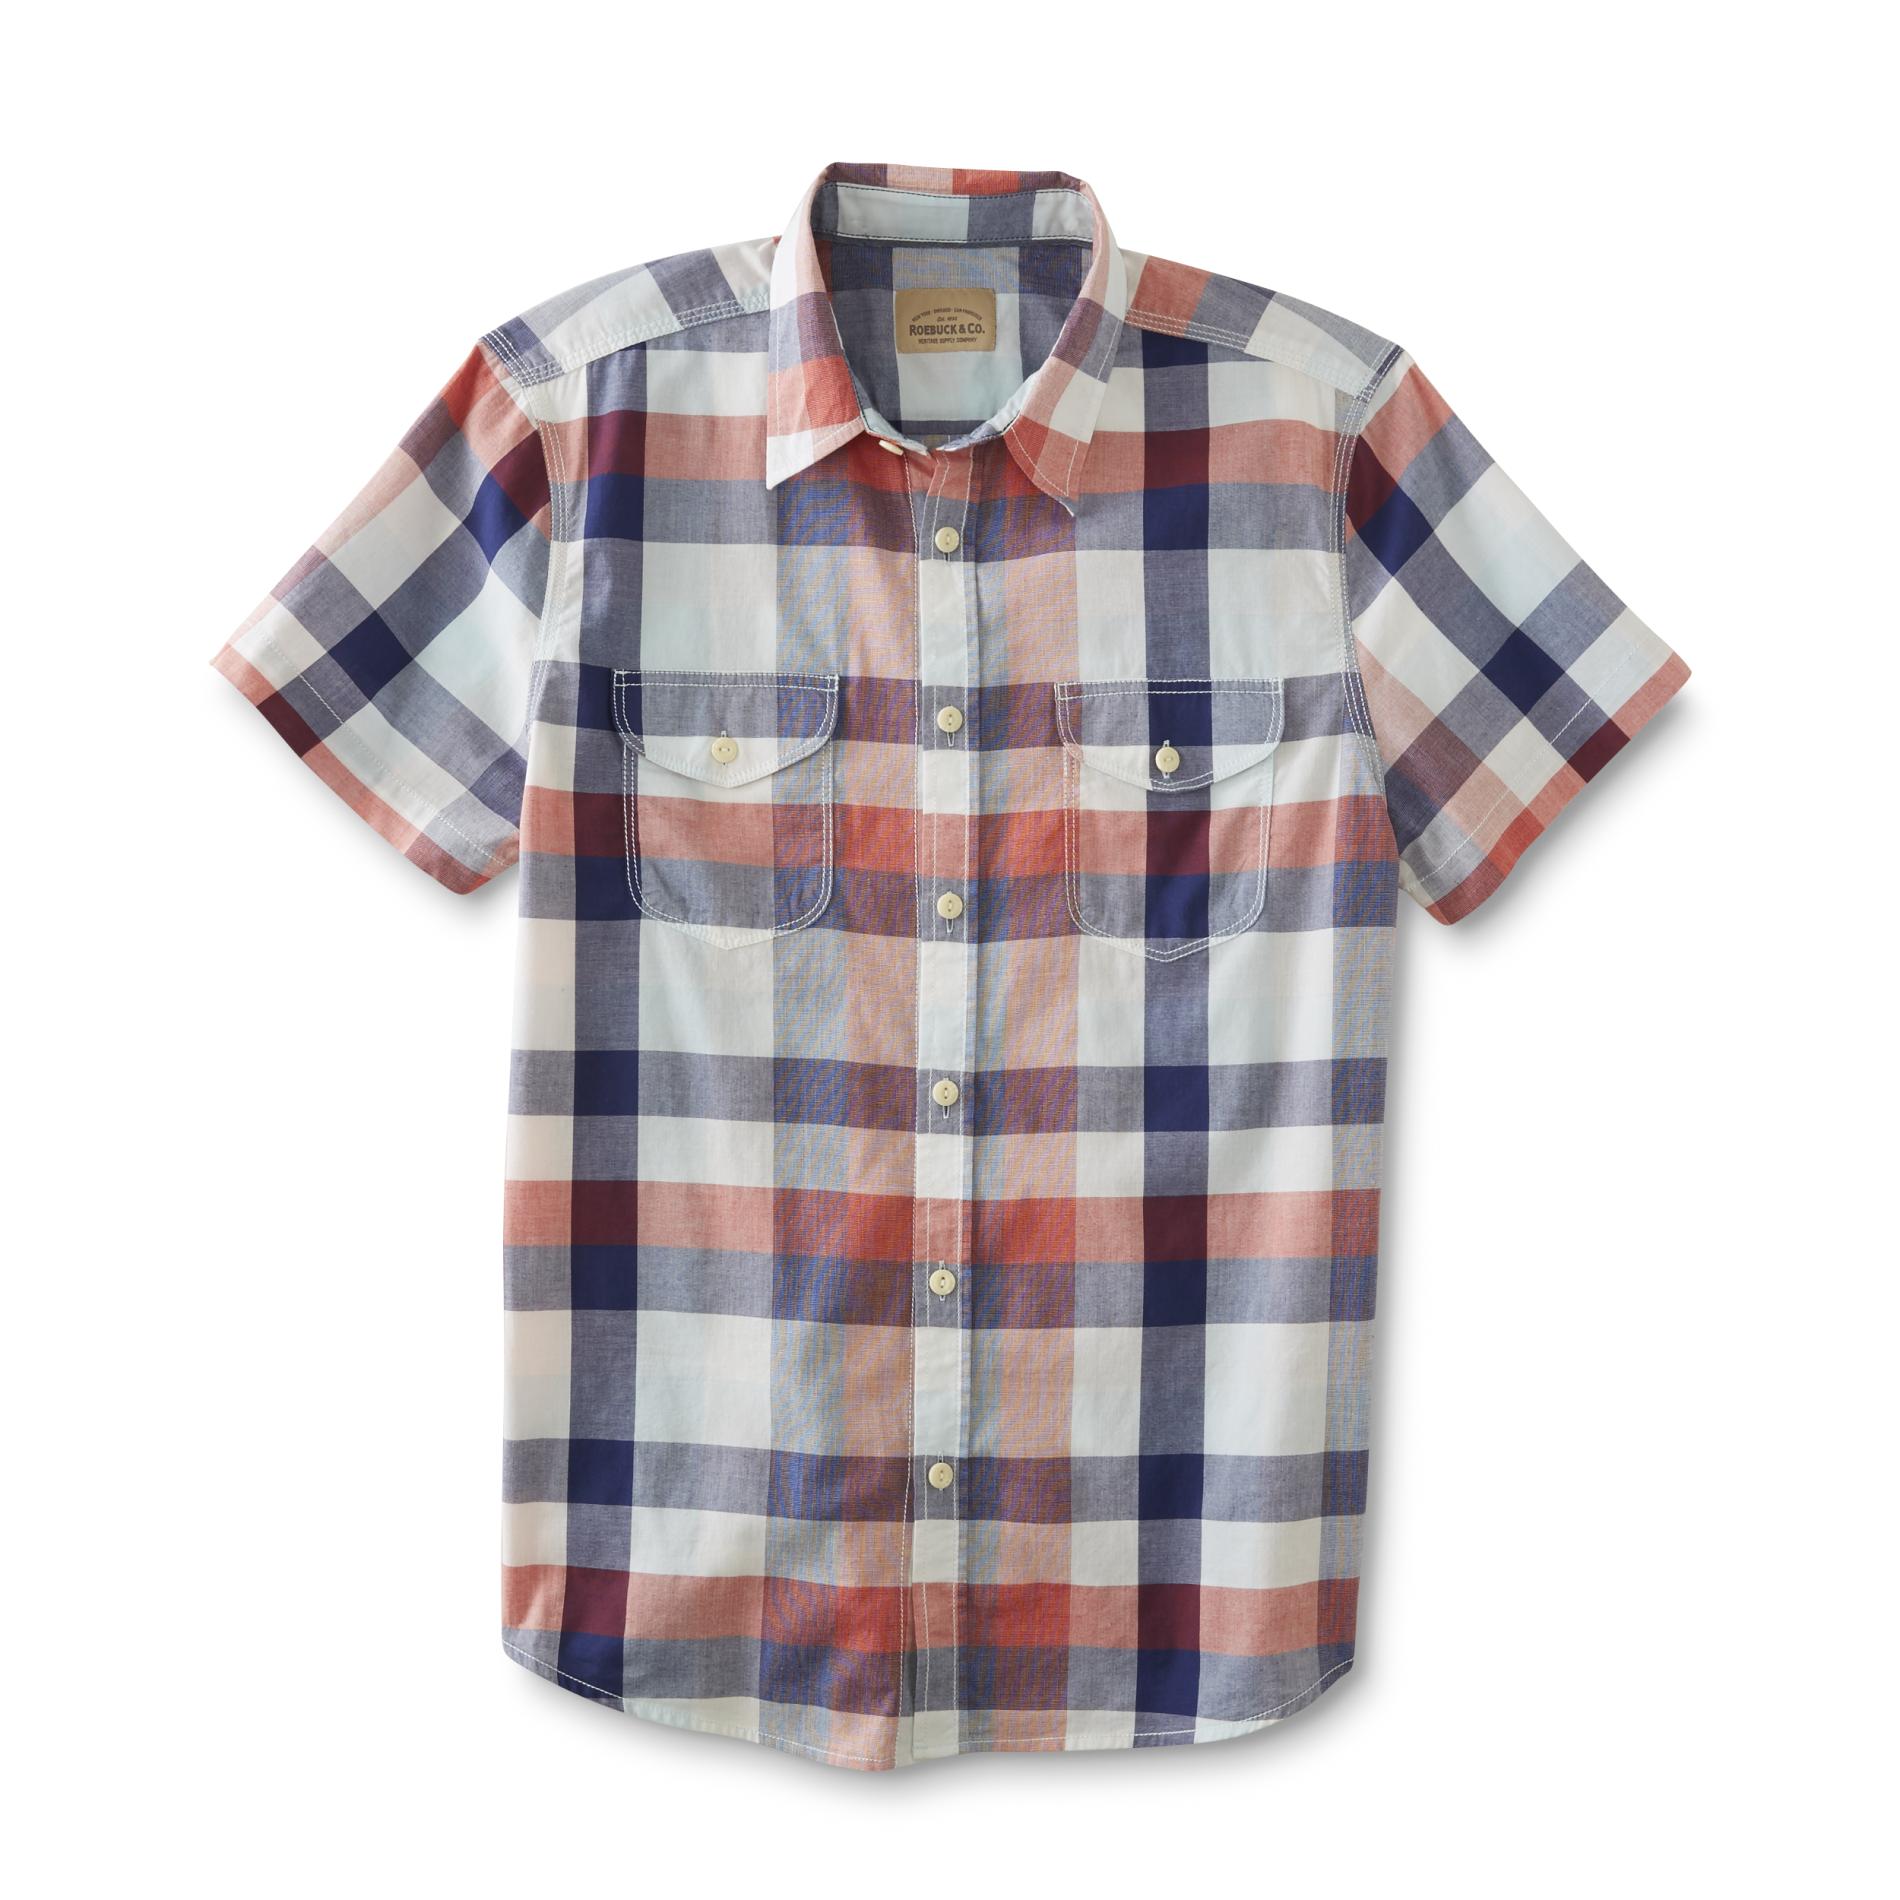 Roebuck & Co. Young Men's Button-Front Shirt - Plaid